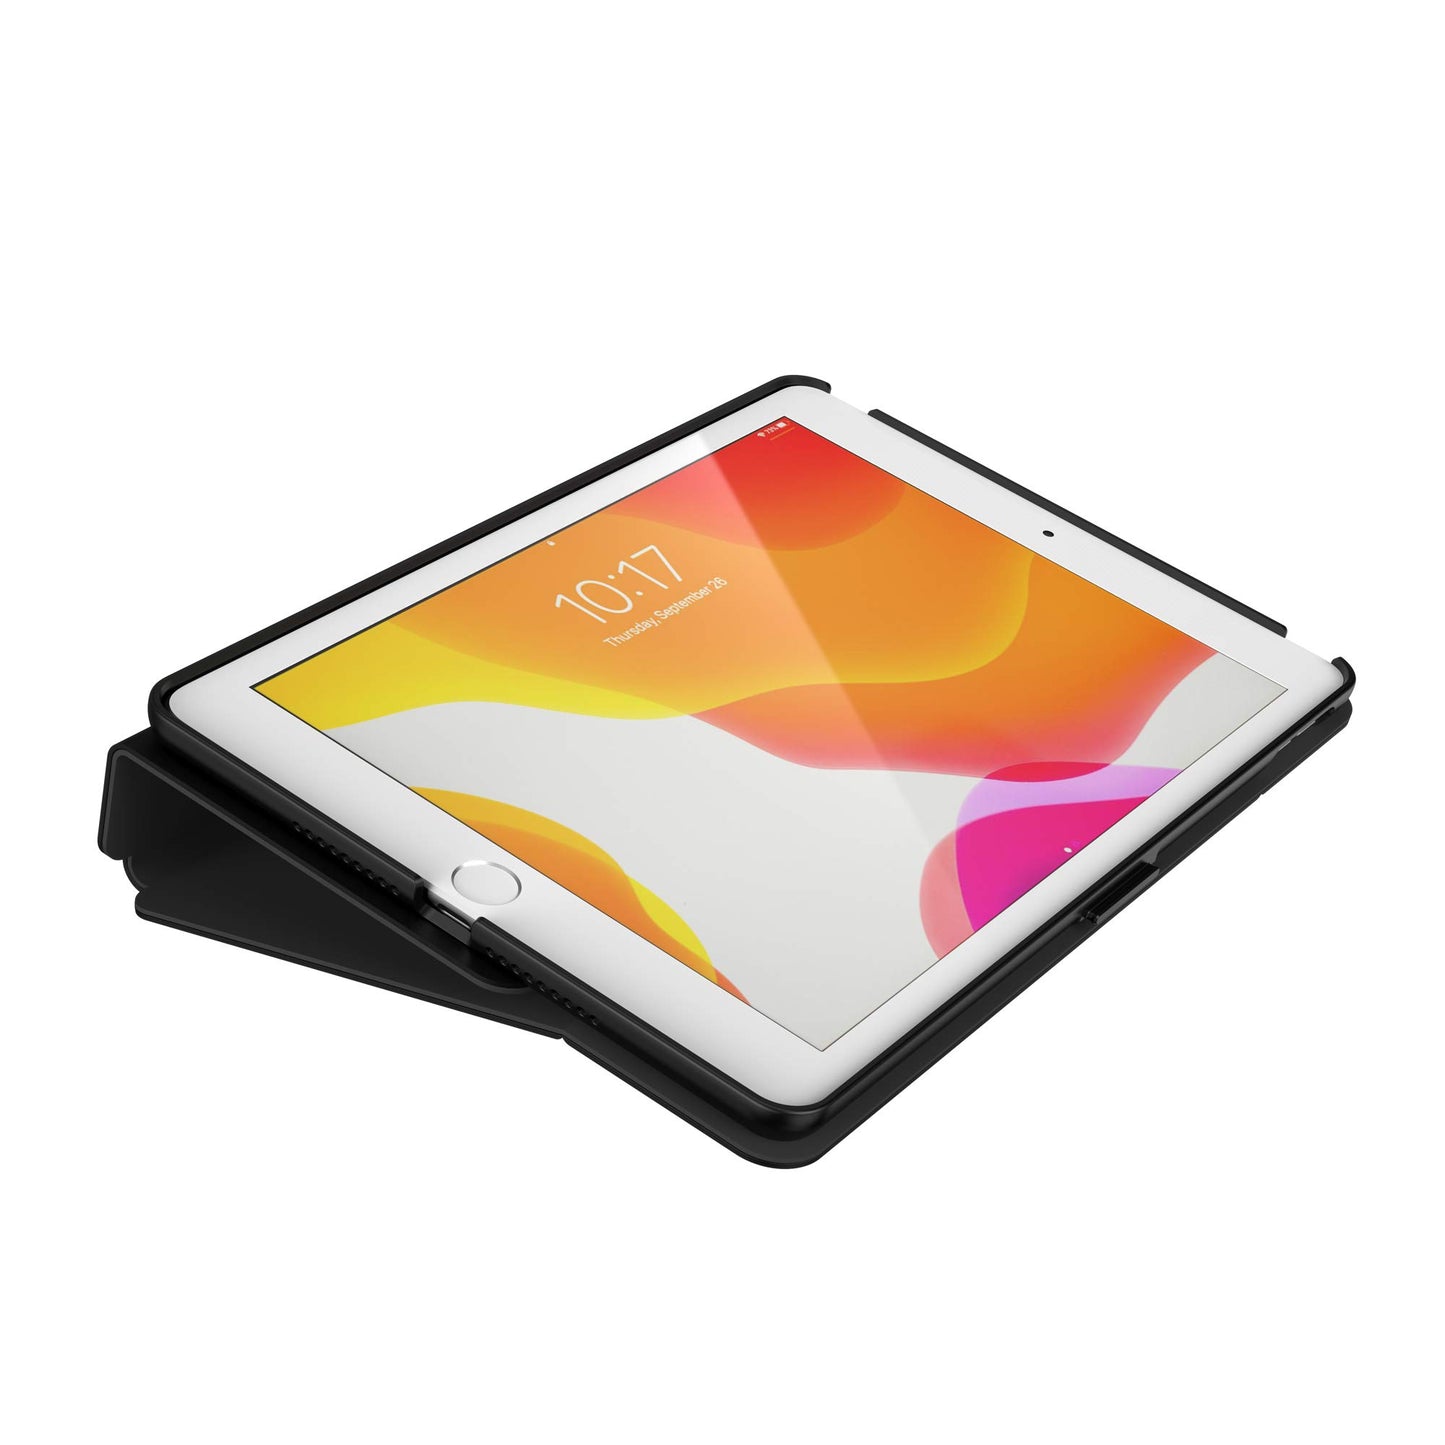 Speck Balance Folio Case for iPad 10.2 Inch (2019-2021) - Drop & Camera Protection, Slim Multi Range Stand, Apple Pencil Holder - Black/Black